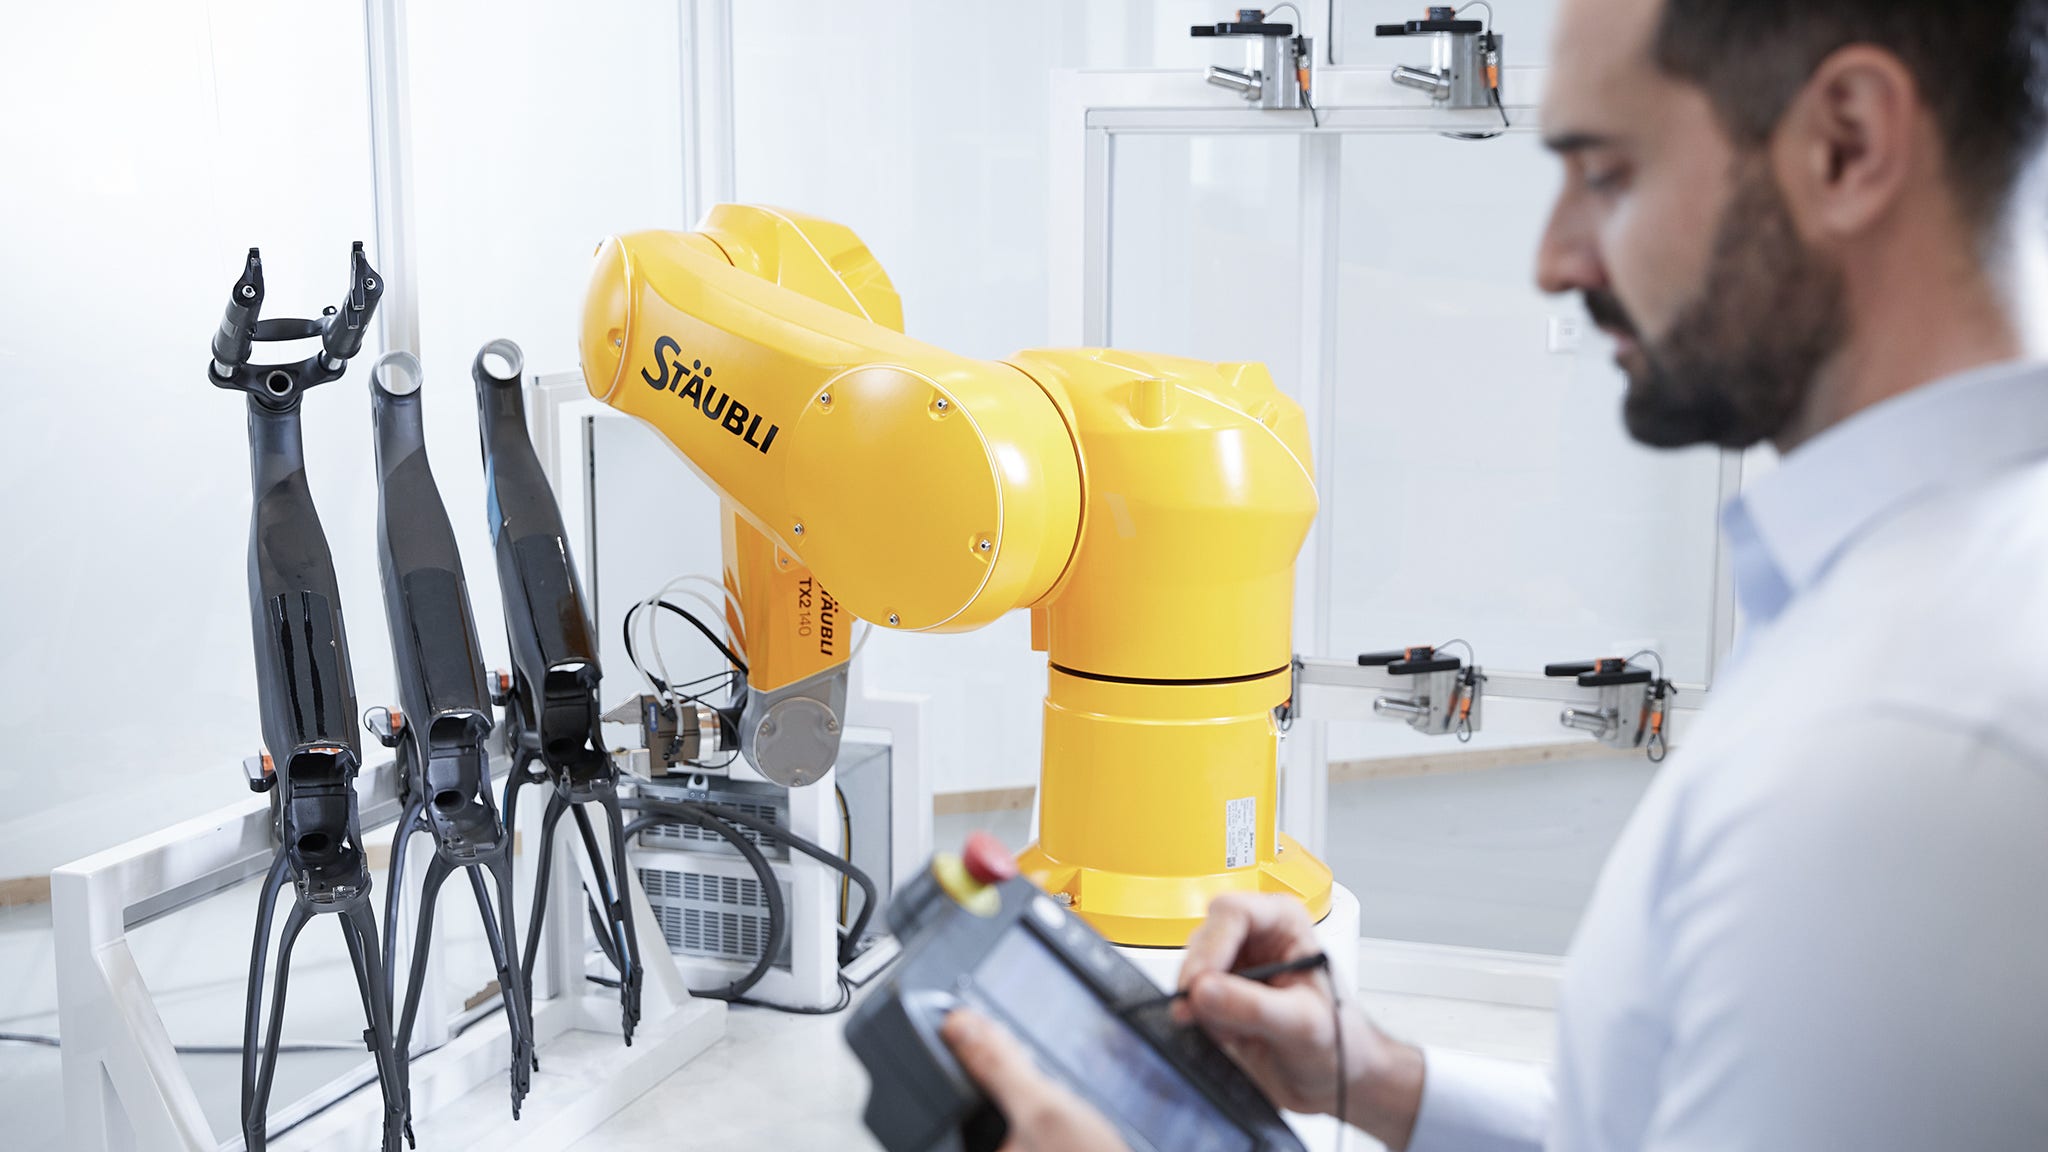 Stäubli Robotics can meet the needs of any industry